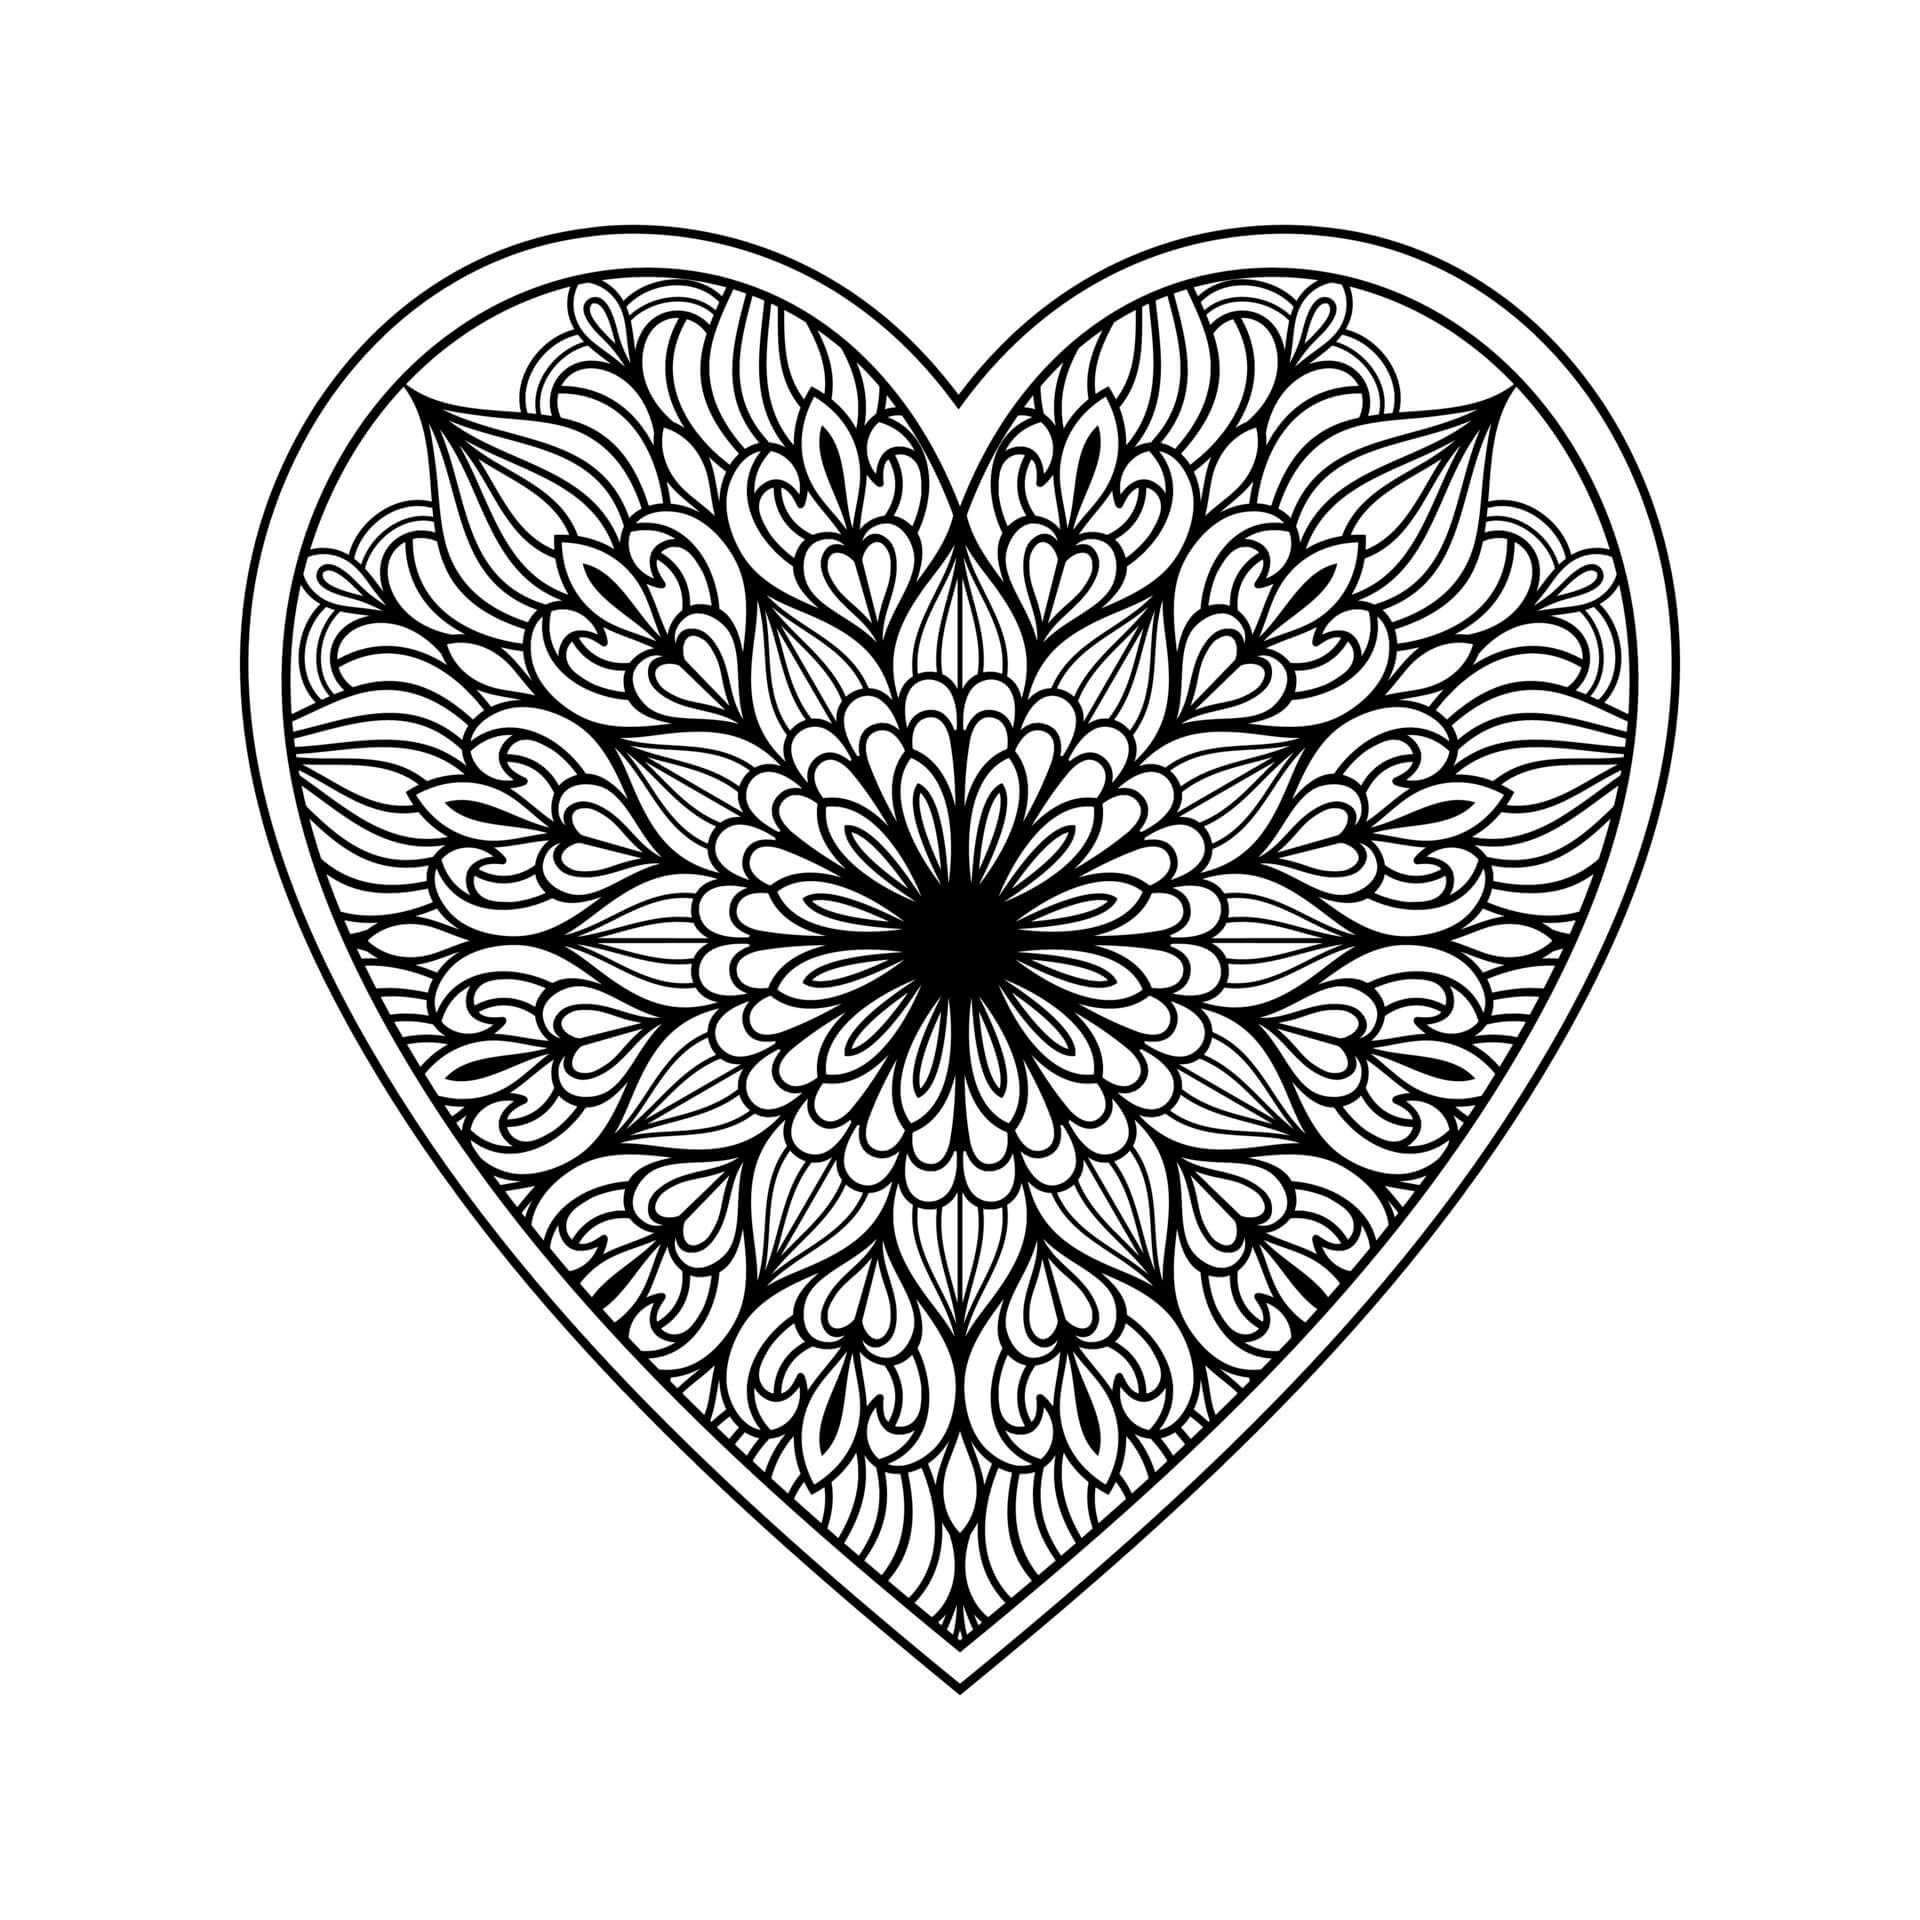 Mandala Heart Coloring Page – Sheet 14 Mandala